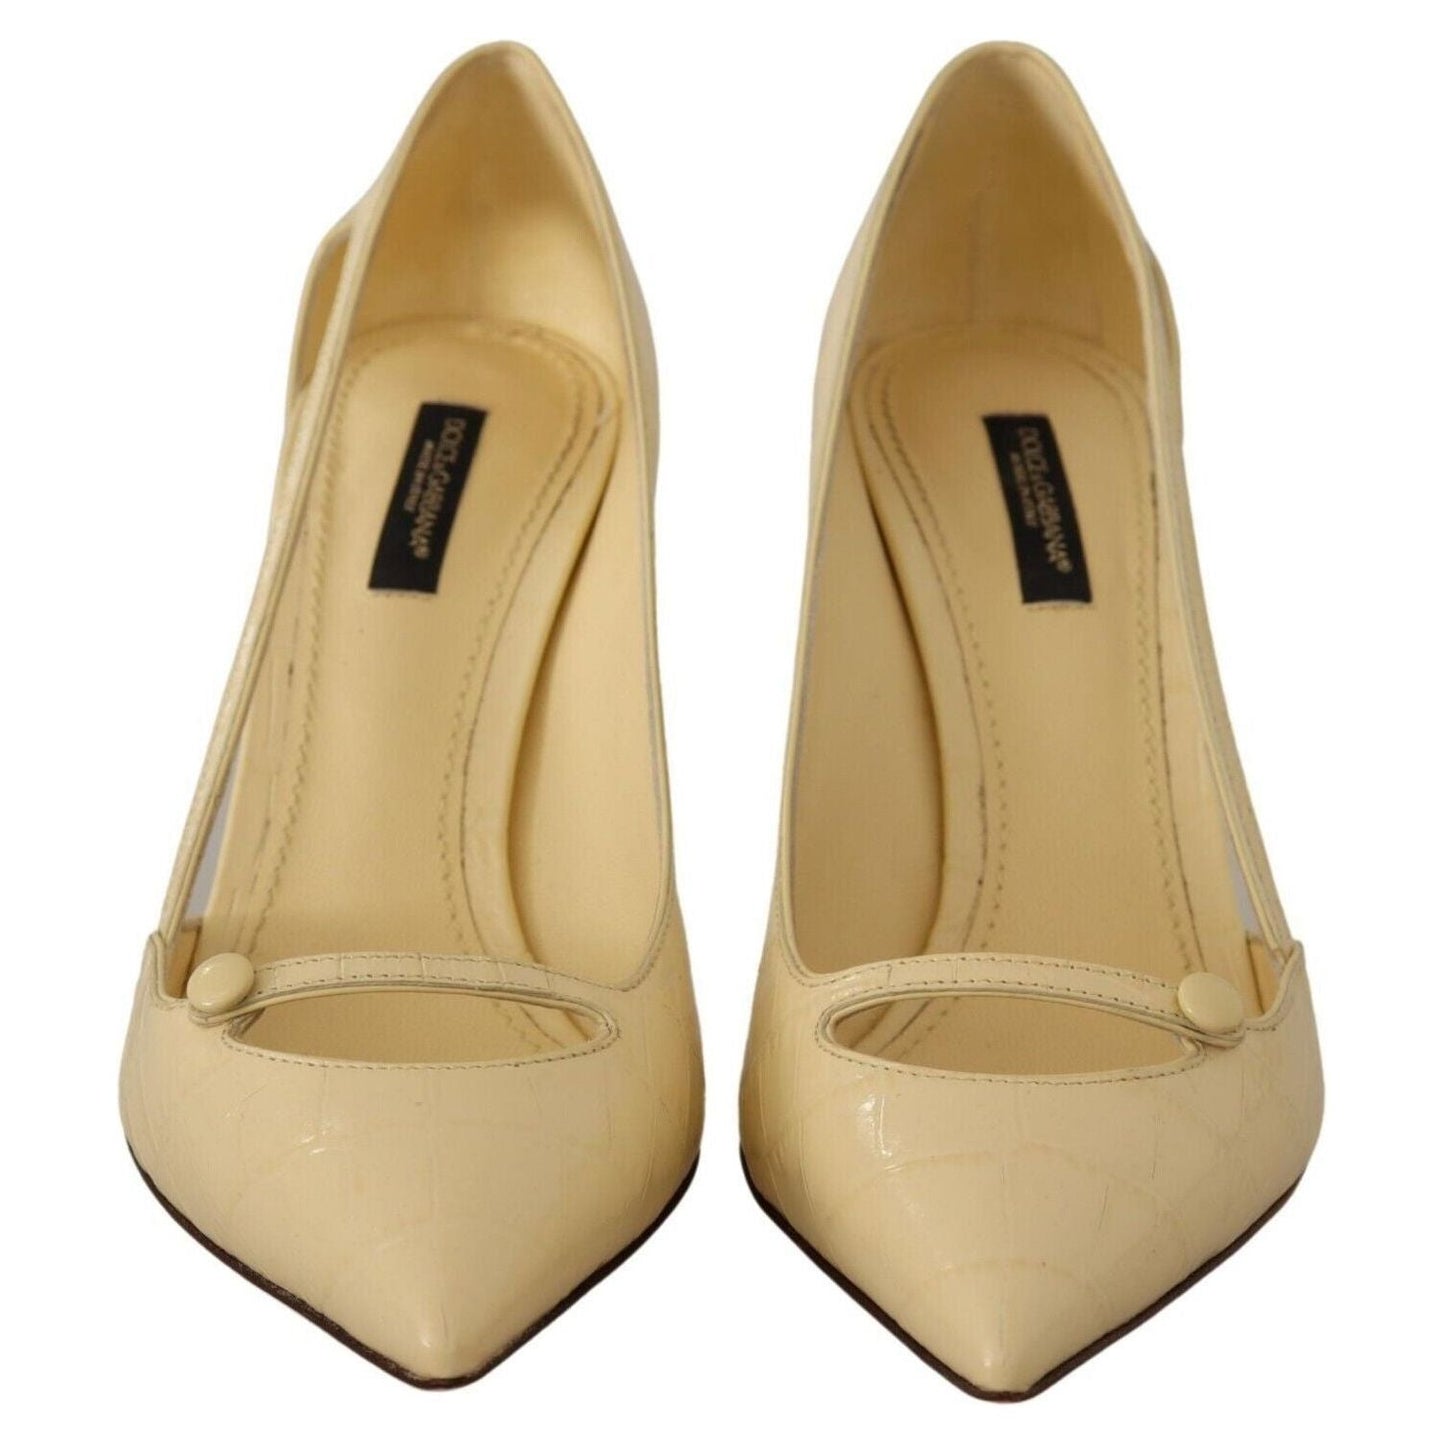 Dolce & GabbanaChic Pointed Toe Leather Pumps in Sunshine YellowMcRichard Designer Brands£439.00